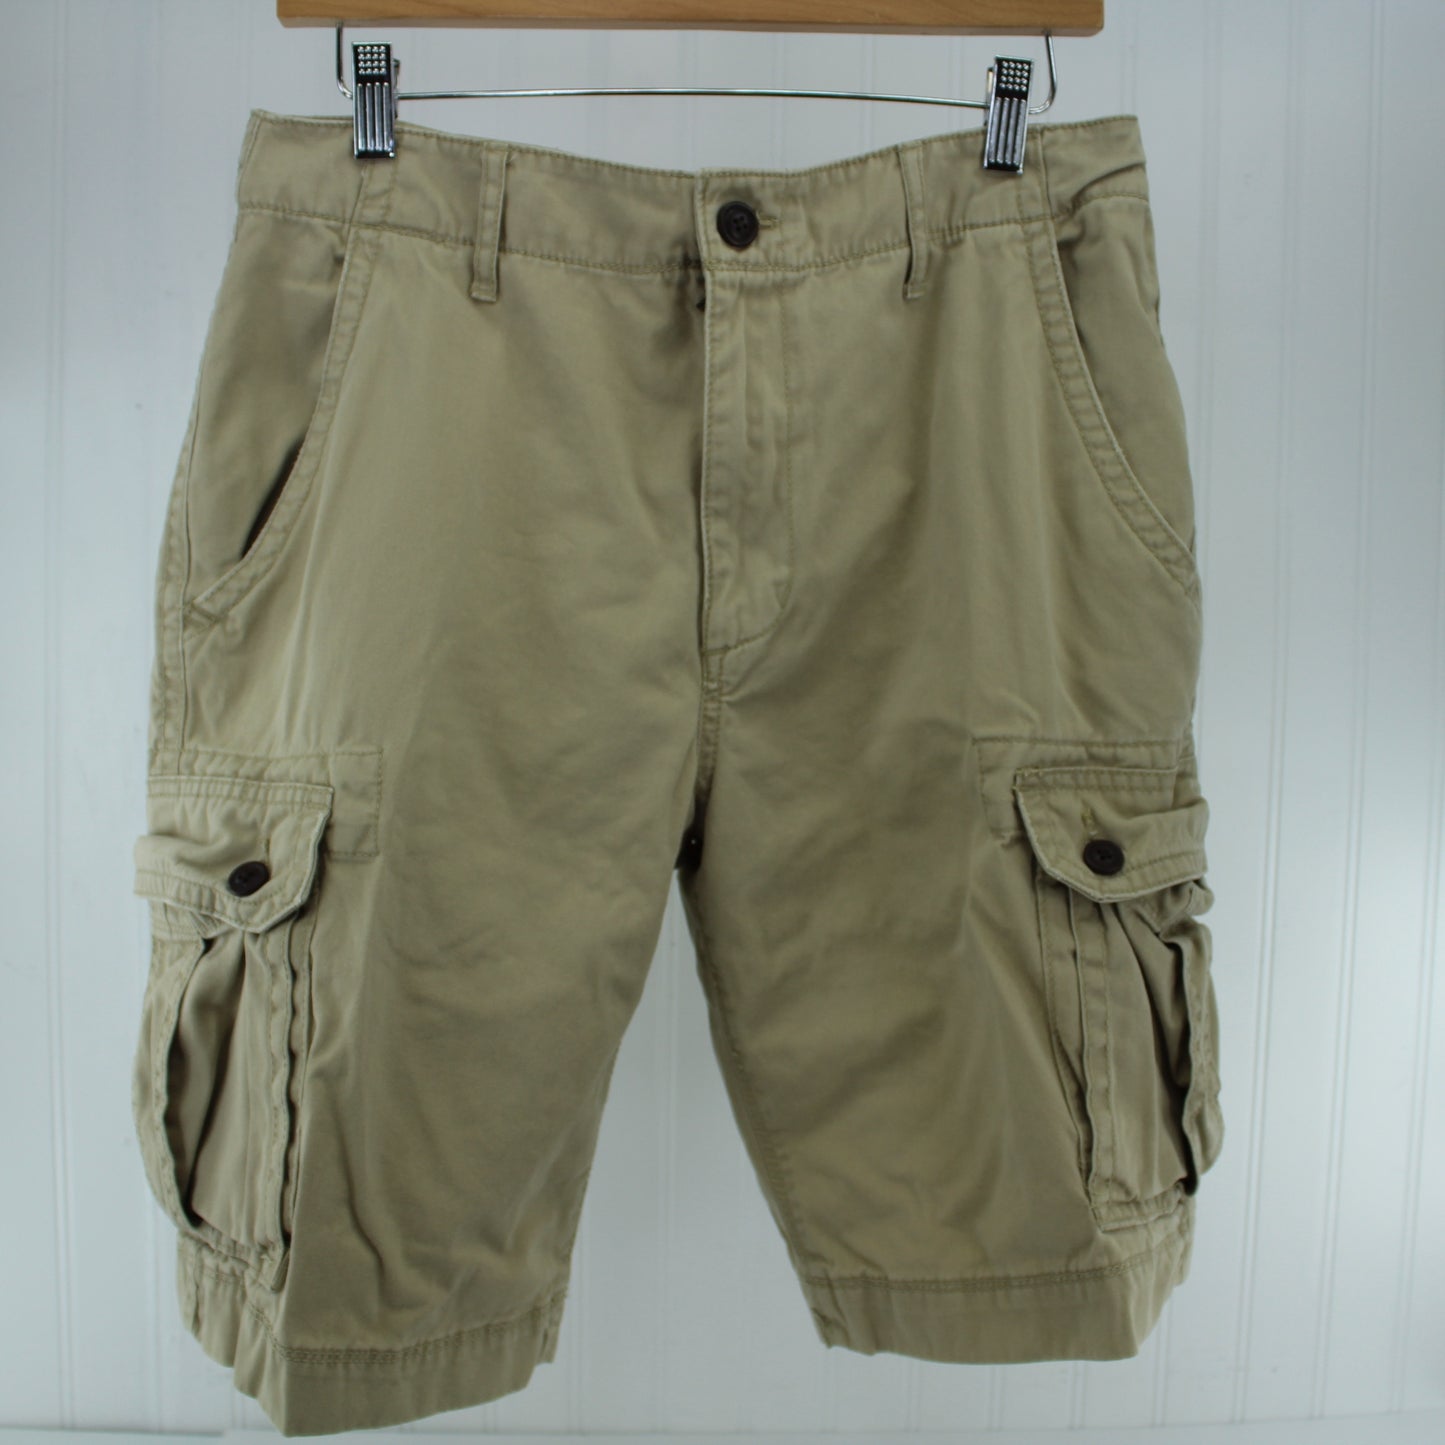 Arizona 100% Cotton Khaki Cargo Pants Size 32 Inseam 9 1/2" excellent pre owned condition